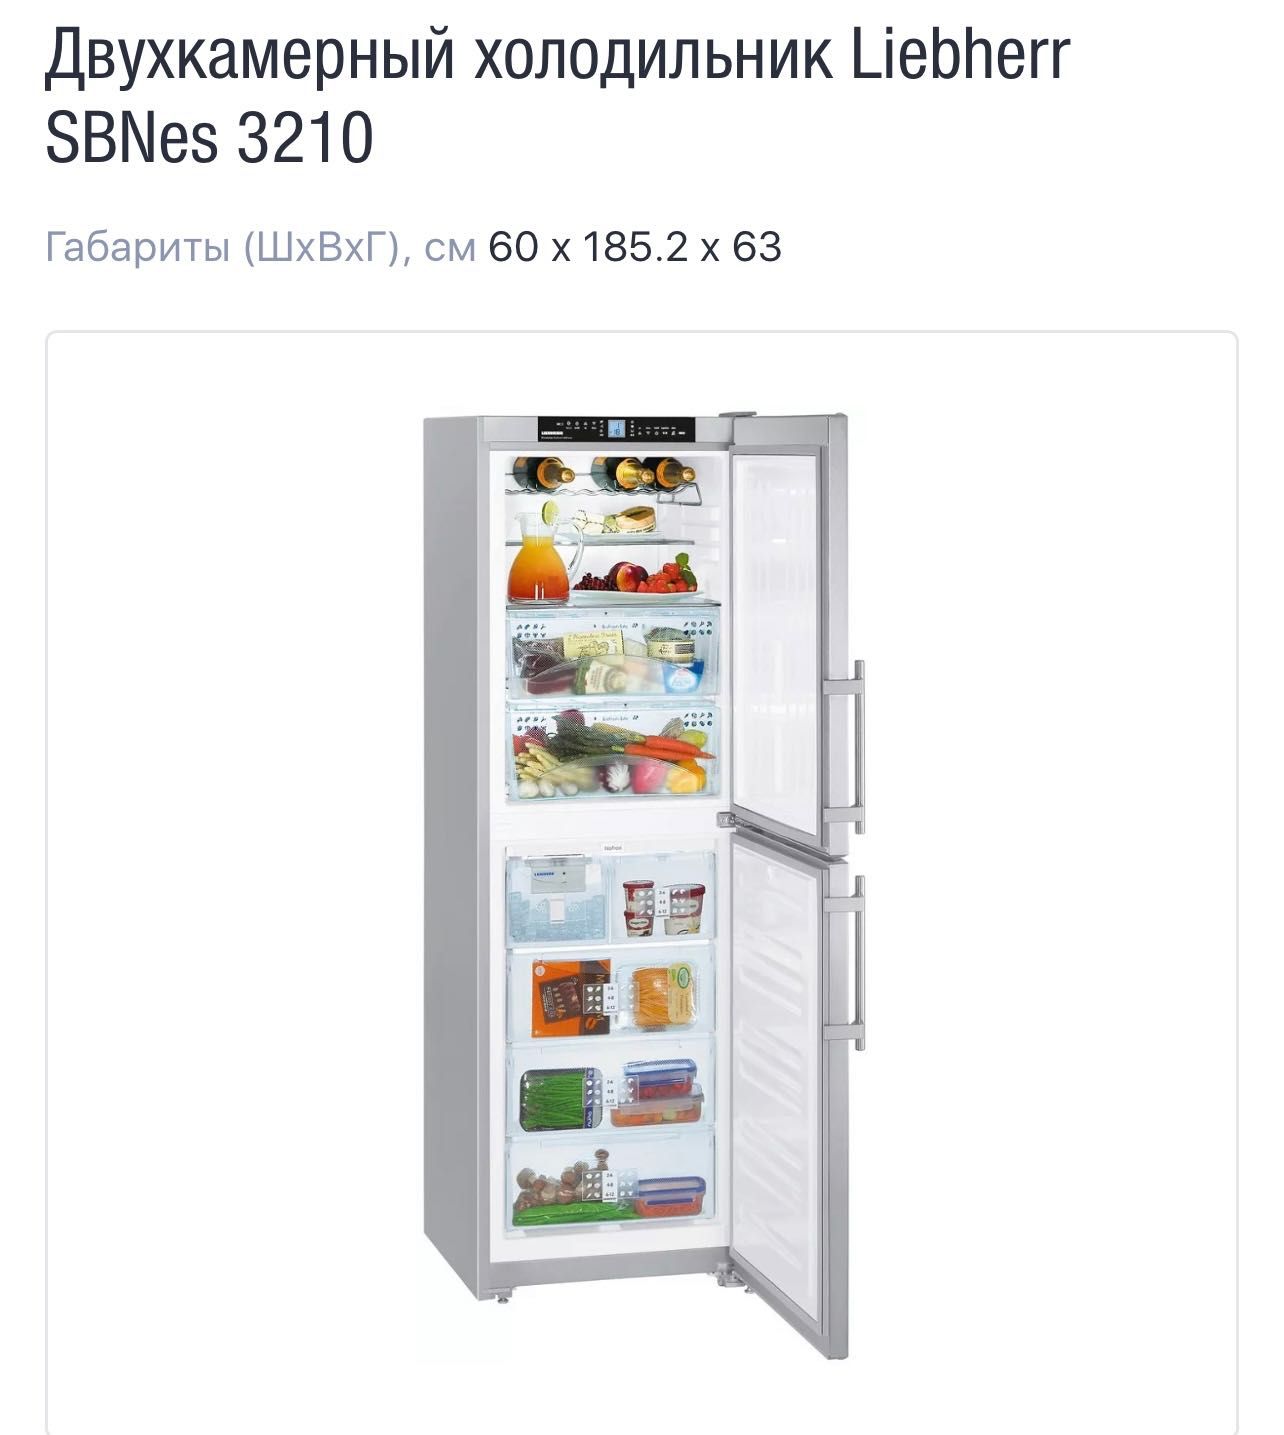 Холодильник Liebherr
SBNes 3210